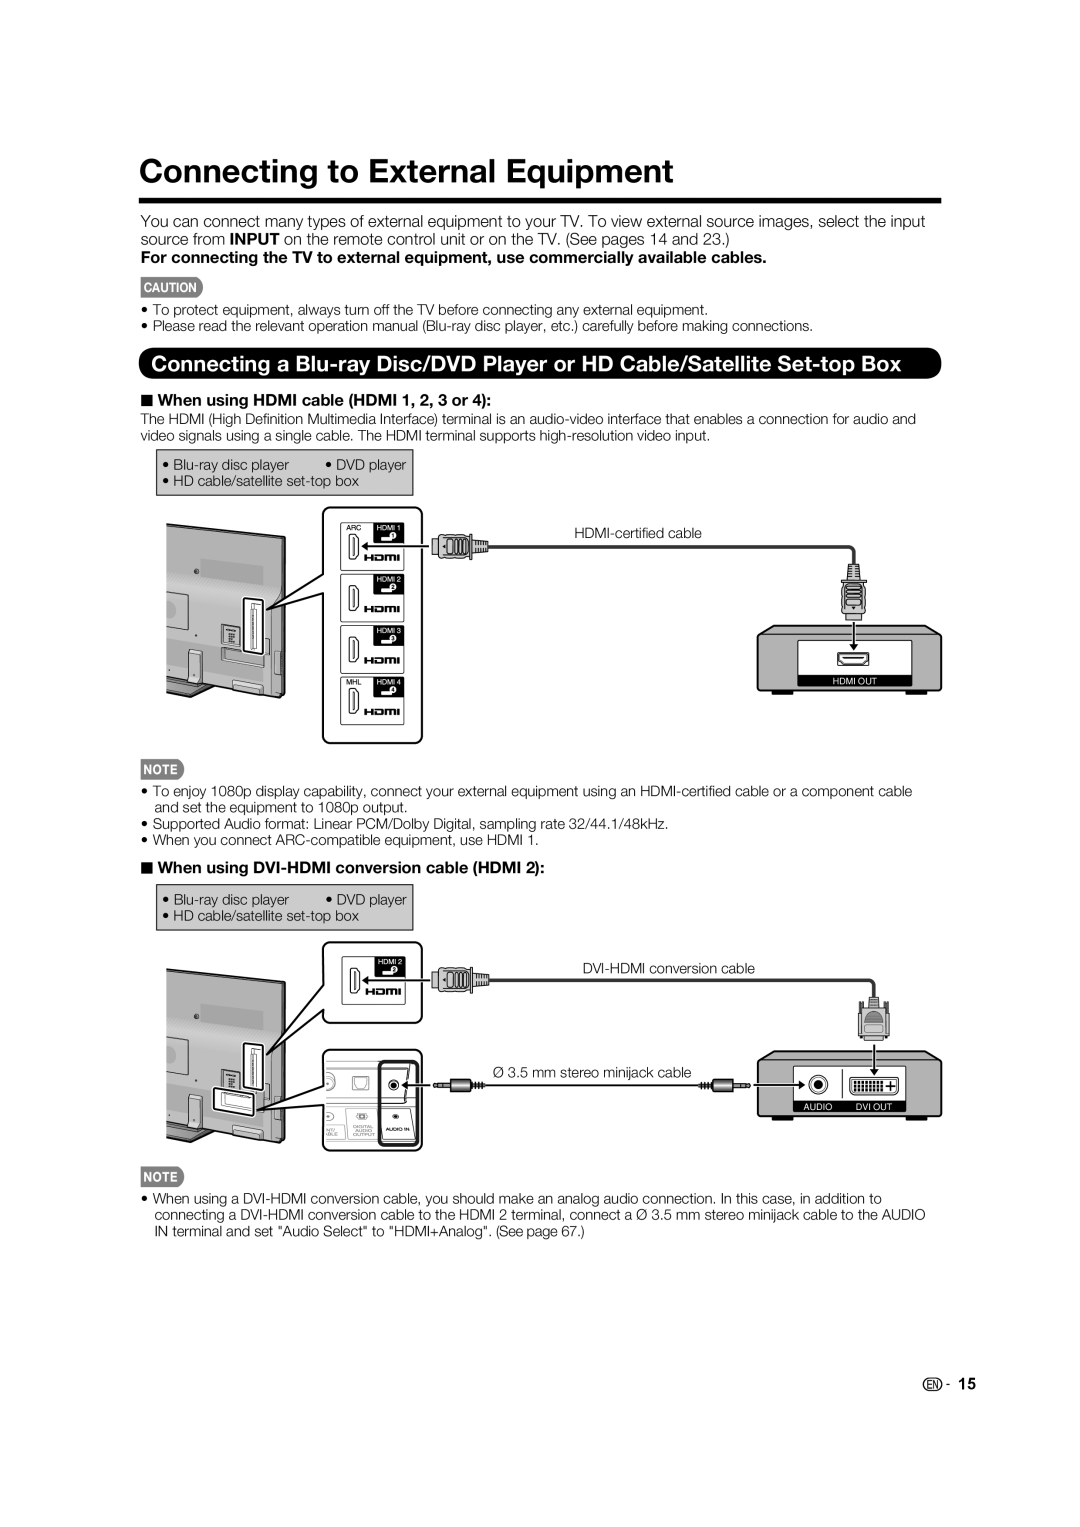 Sharp LC-70C8470U, LC-70C7450U, LC-60C7450U DVI-HDMI conversion cable Ø 3.5 mm stereo minijack cable, Audio, Dvi Out 